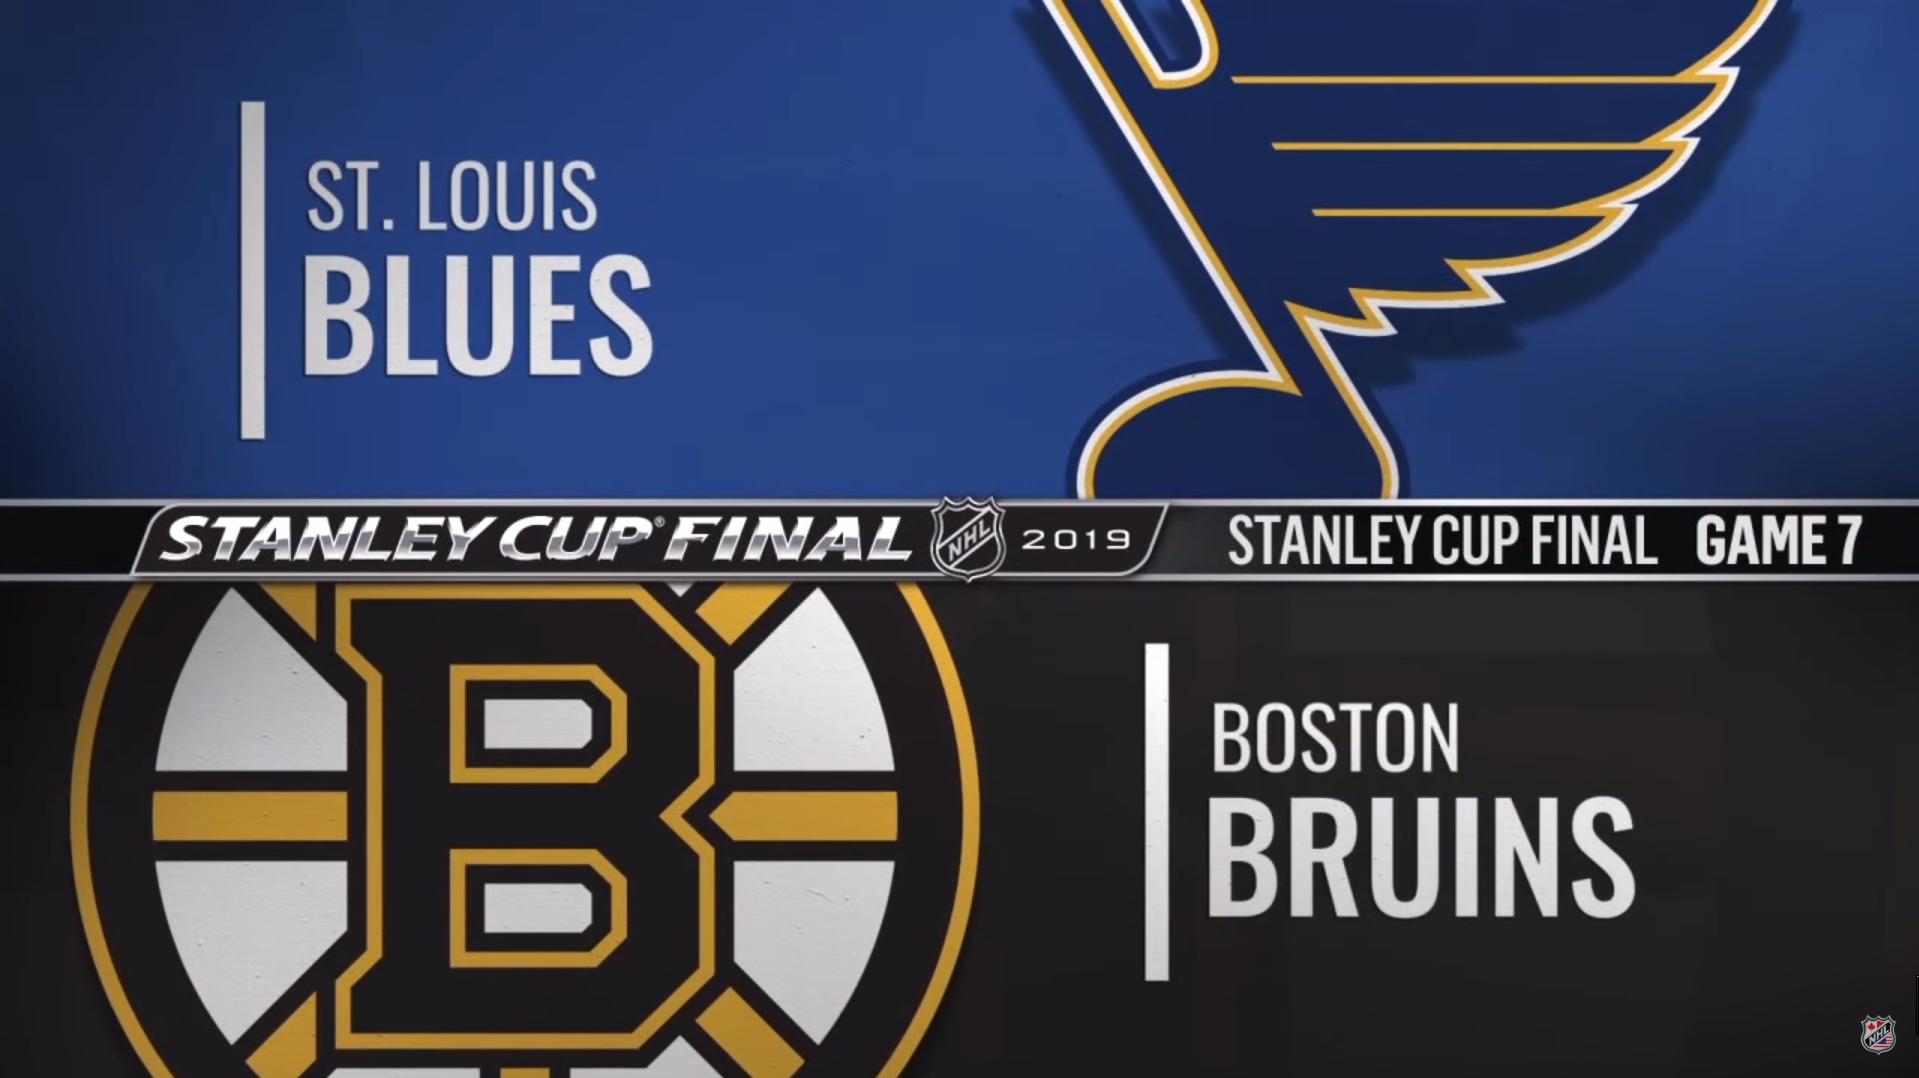 Boston Bruins - St. Louis Blues